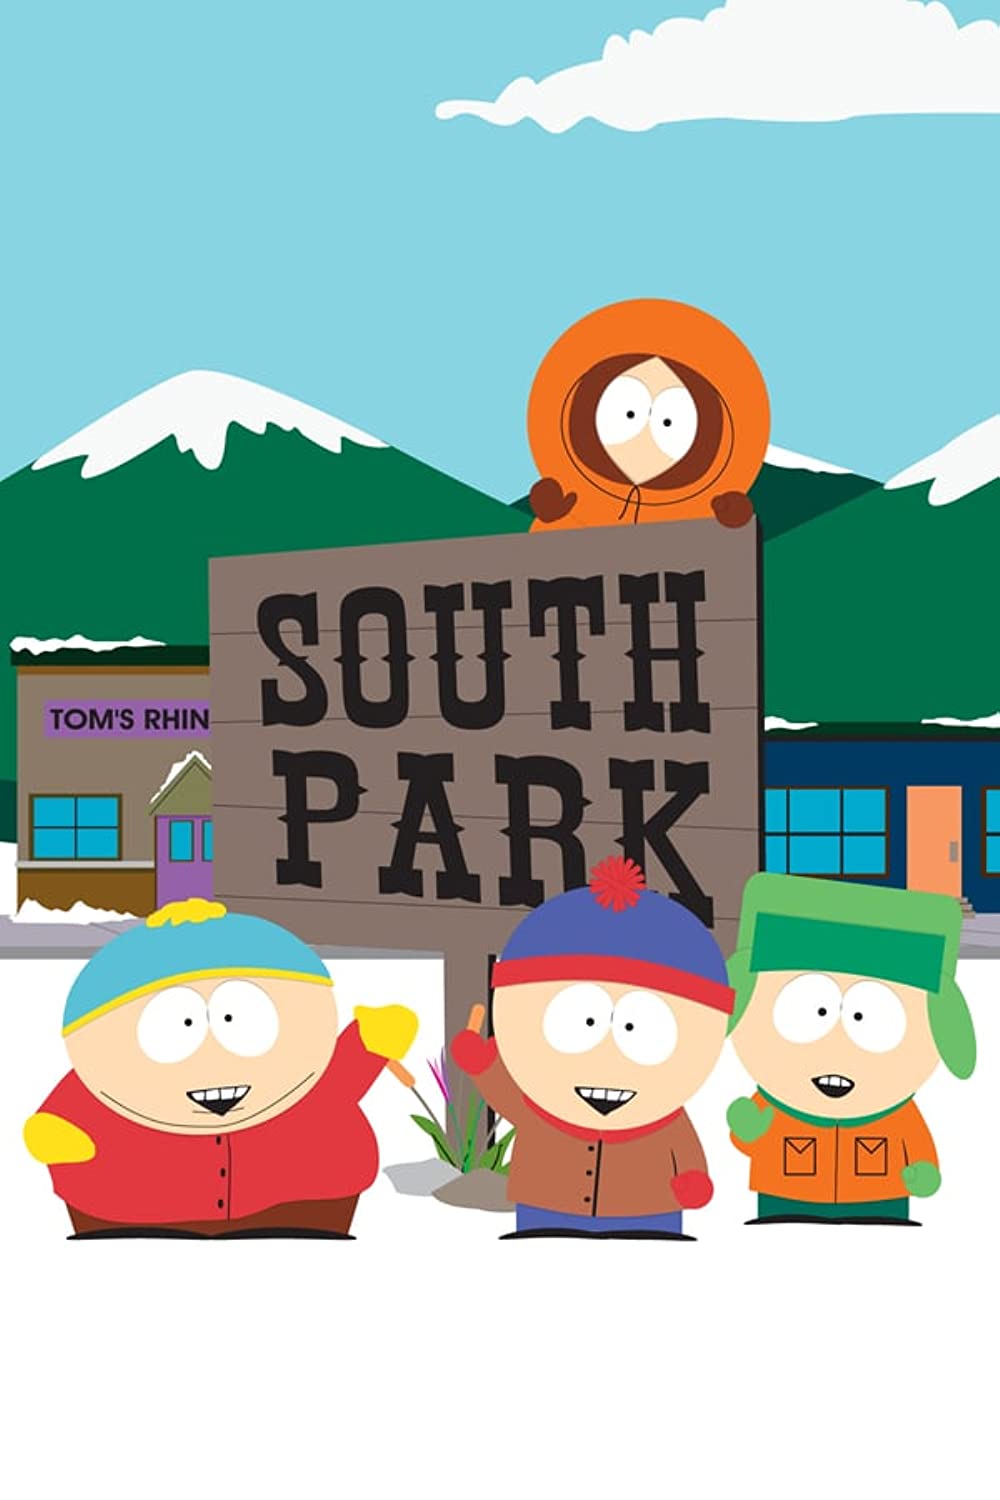 Filmbeschreibung zu South Park (OV)